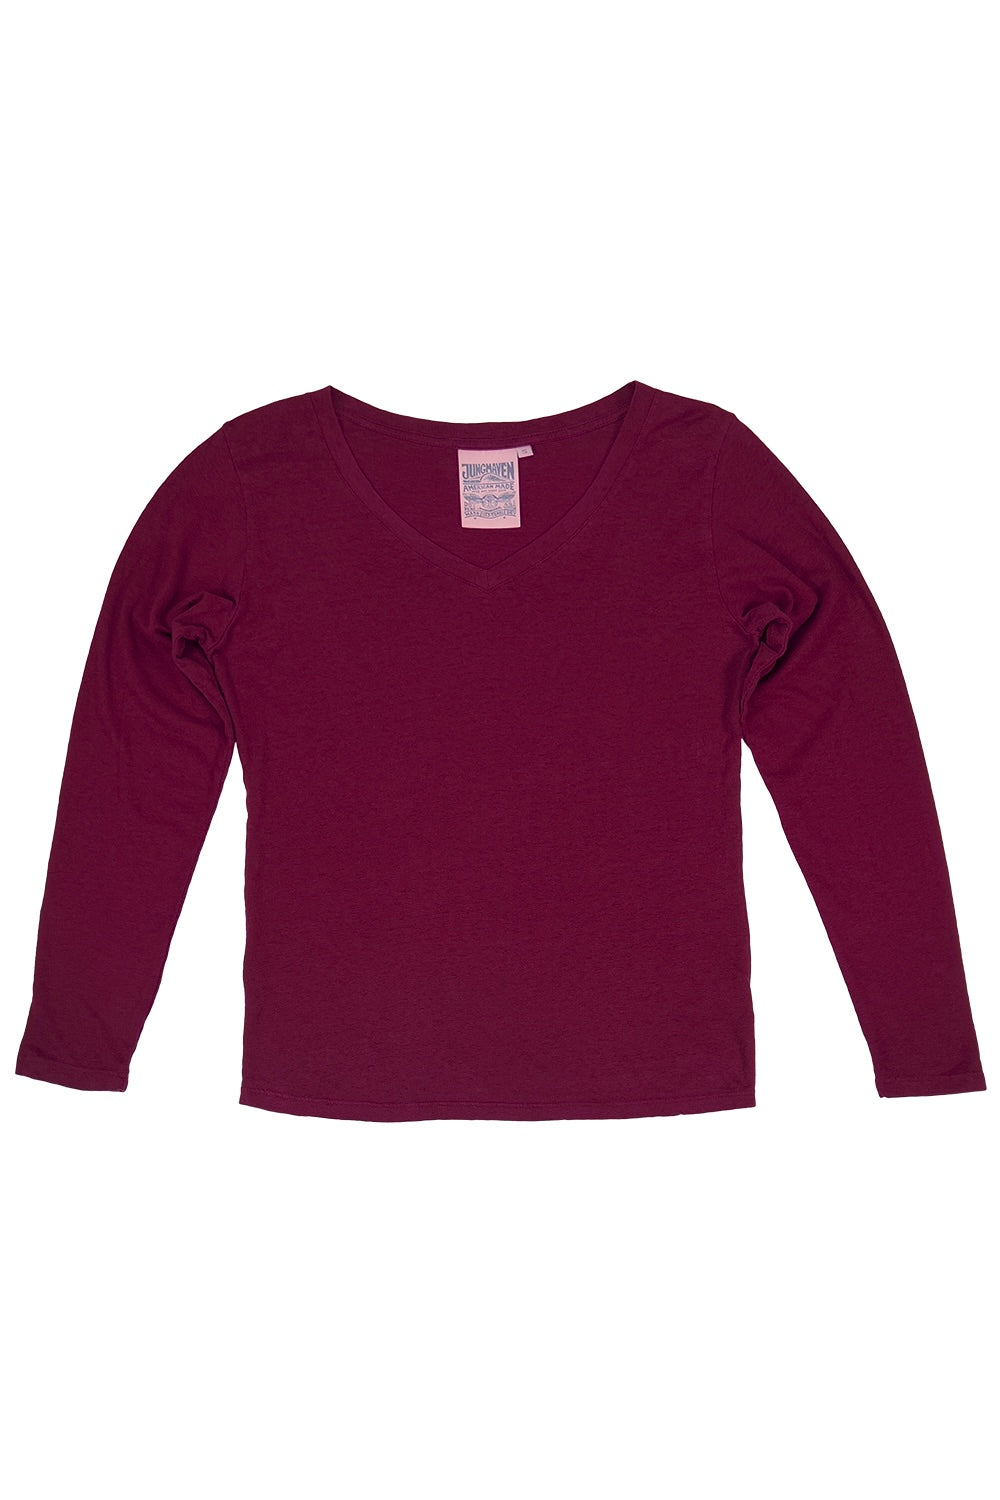 Finch Long Sleeve V-neck | Jungmaven Hemp Clothing & Accessories / Color: Burgundy